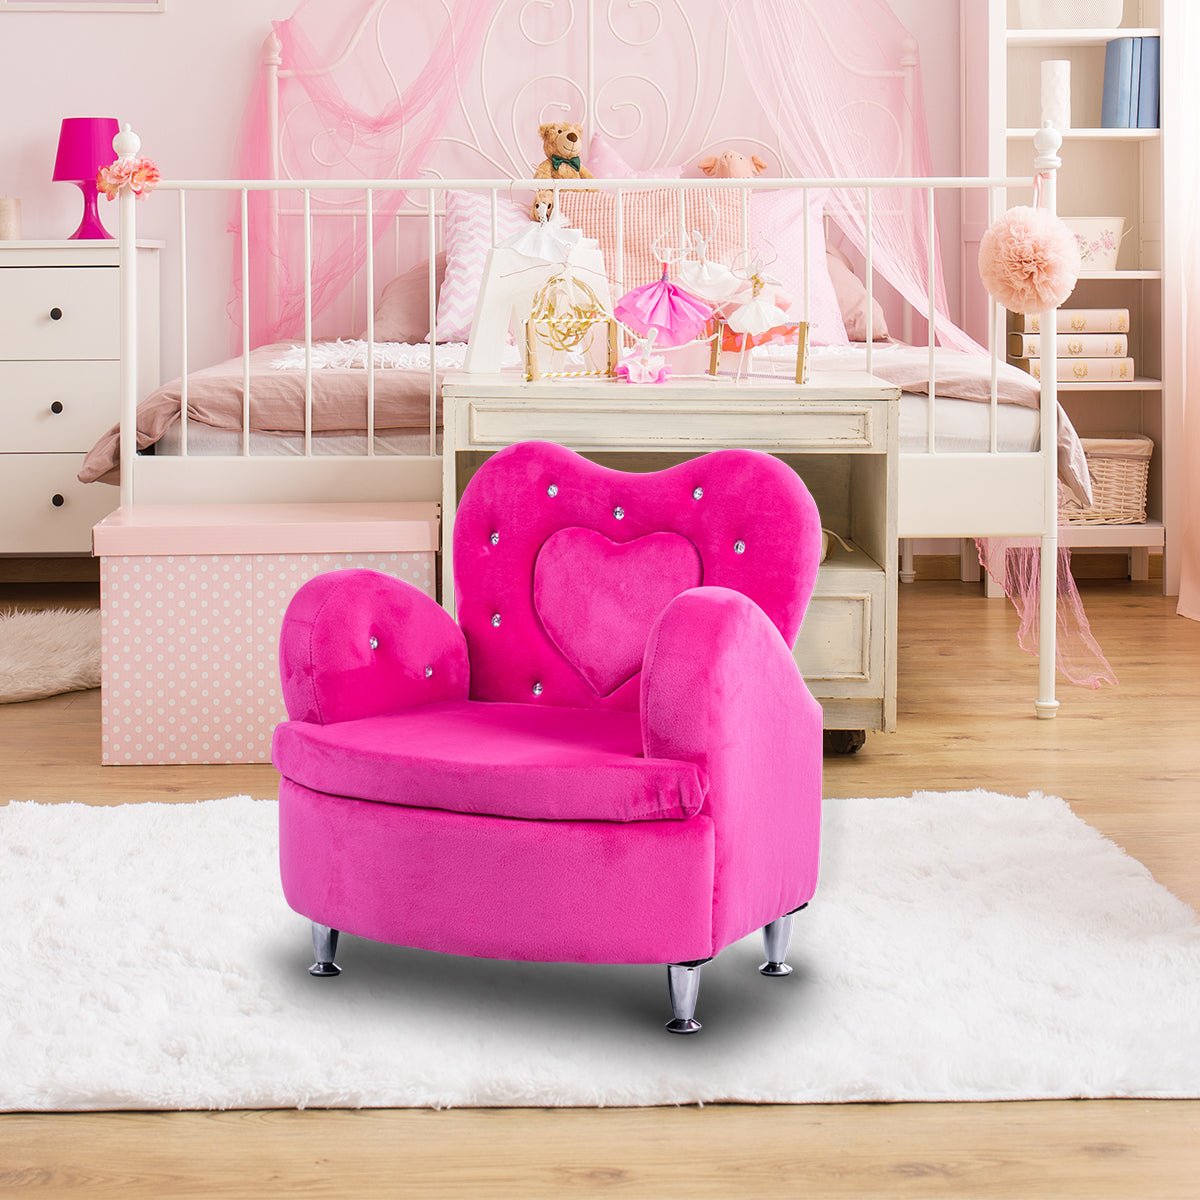 Single Kids Armchair: Sofa Chair for Toddlers, Non-slip Legs, Living Room